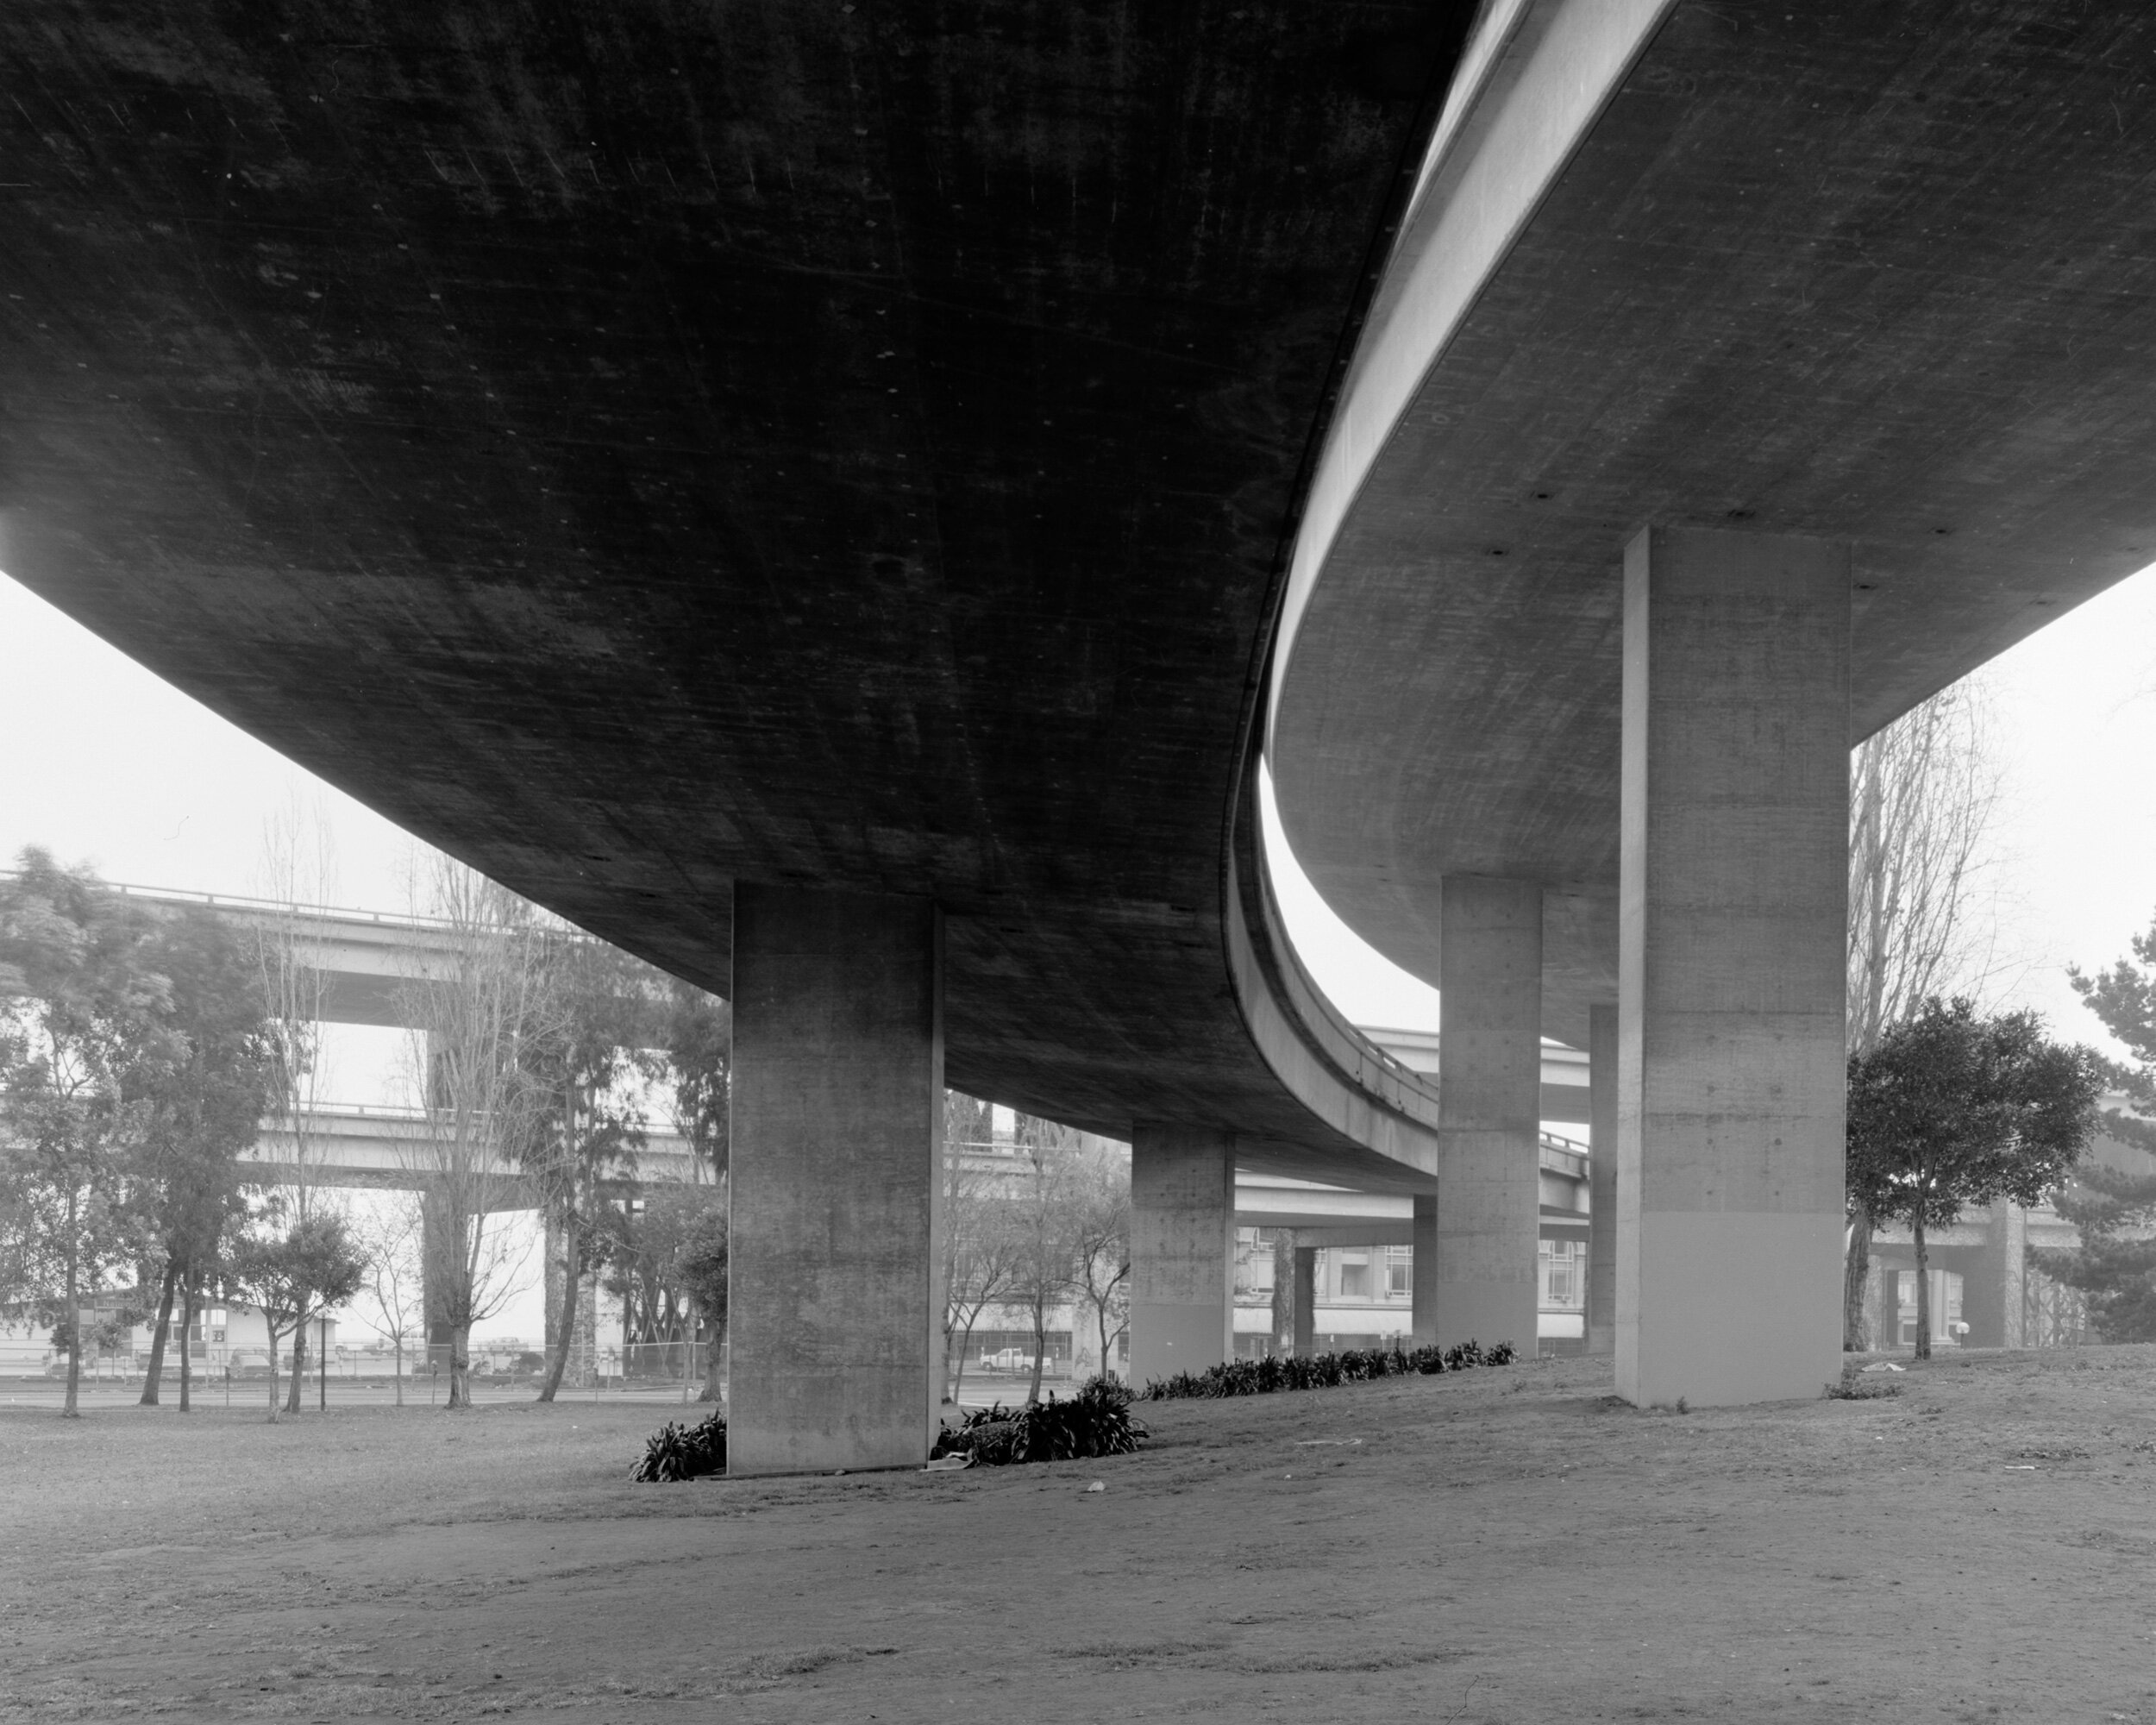 Washington St./Clay St, Off/Onramps. Ground Level. Embarcadero Freeway, 1990.